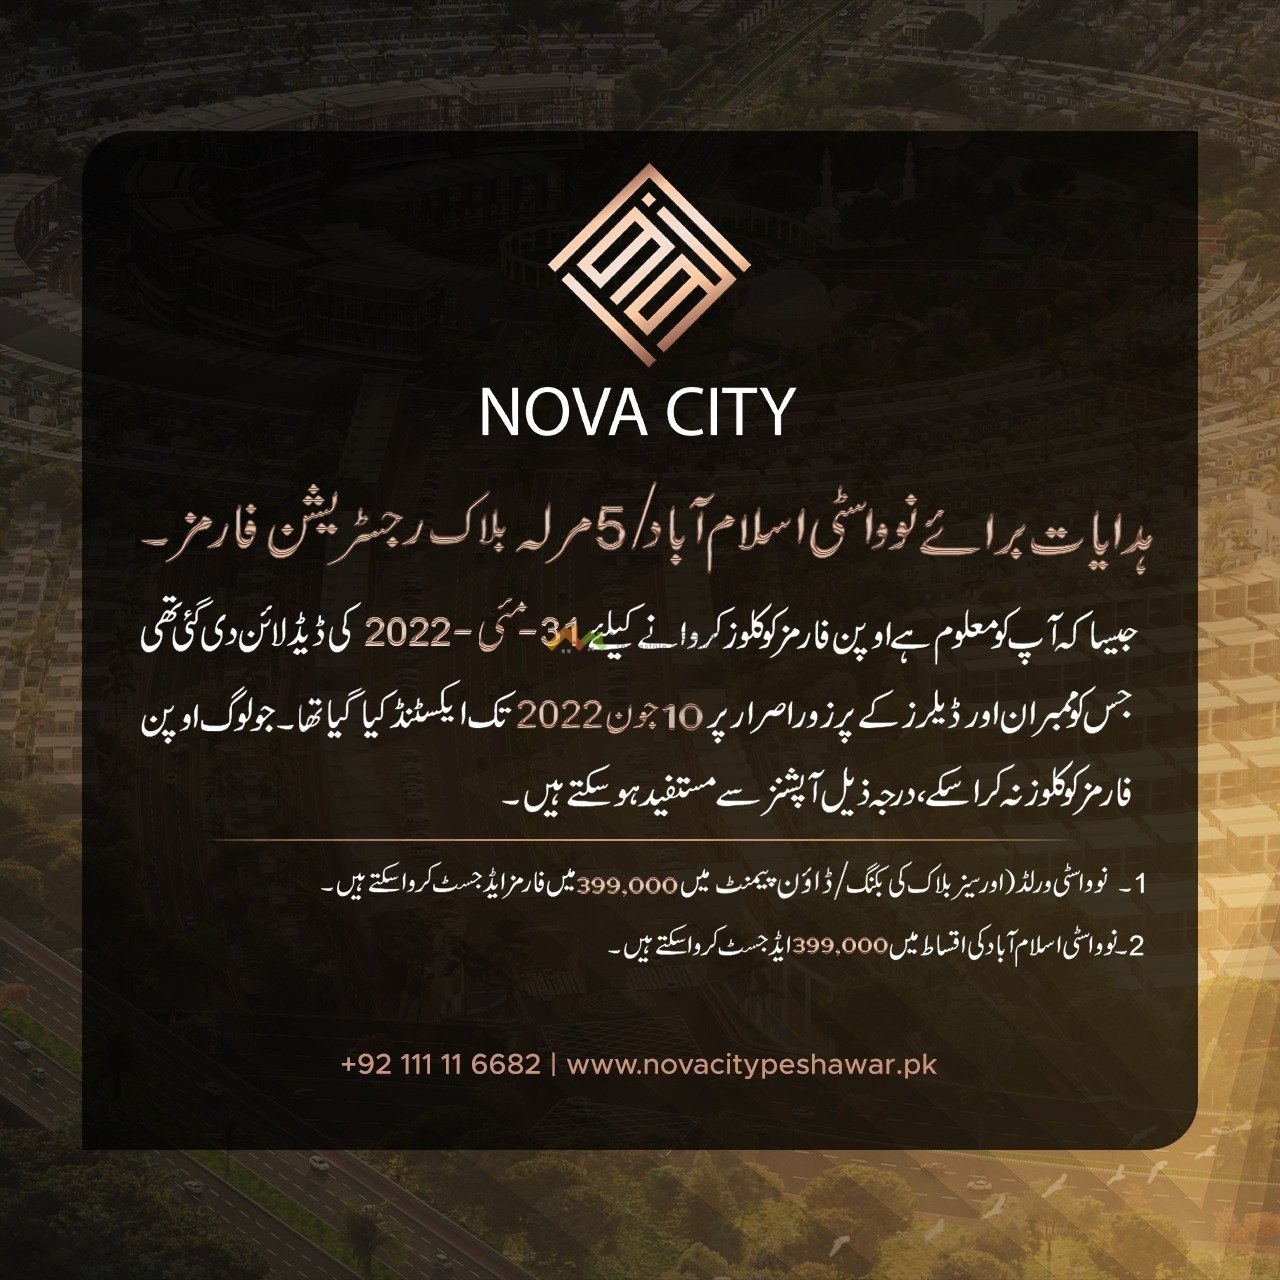 Nova City 5 Marla Non-closed Forms Official Notification